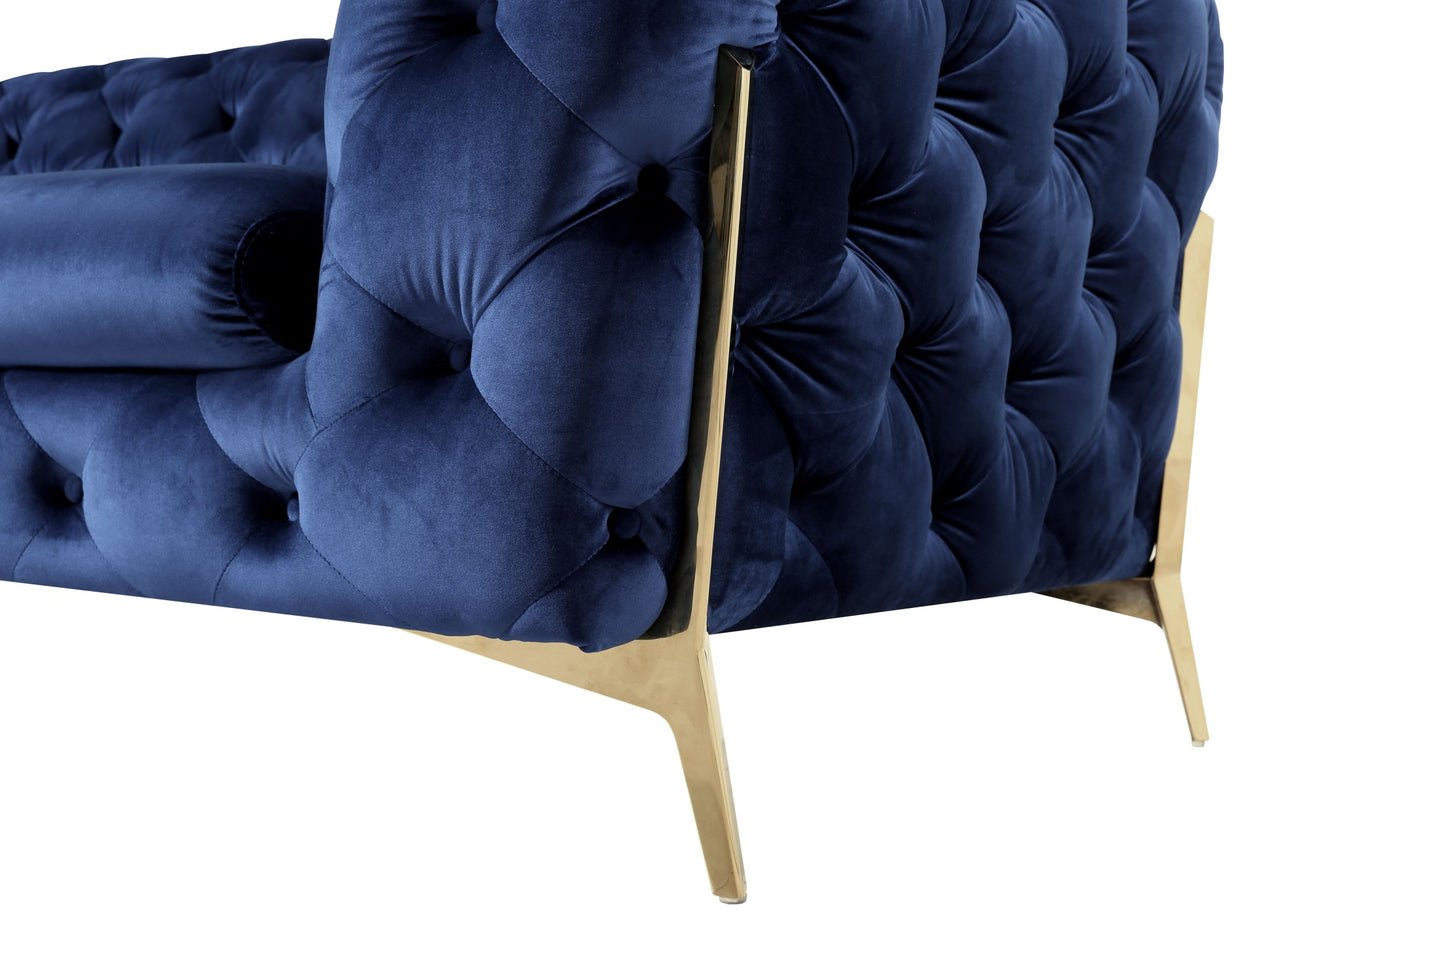 VIG Furniture Divani Casa Quincey Blue Velvet Loveseat